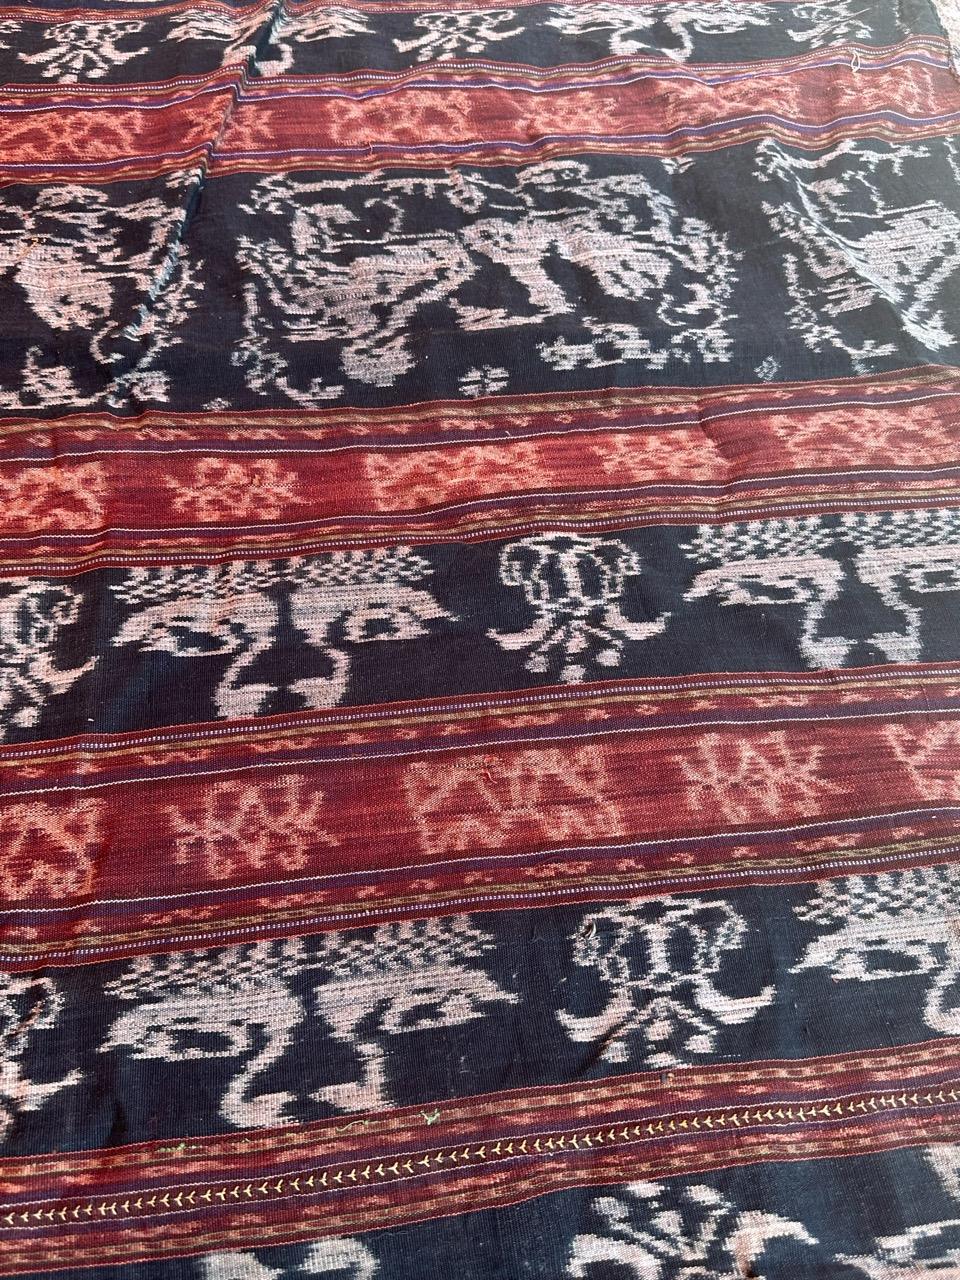 Bobyrug’s Vintage Indonesian Ikat Tapestry or Tablecloth For Sale 1